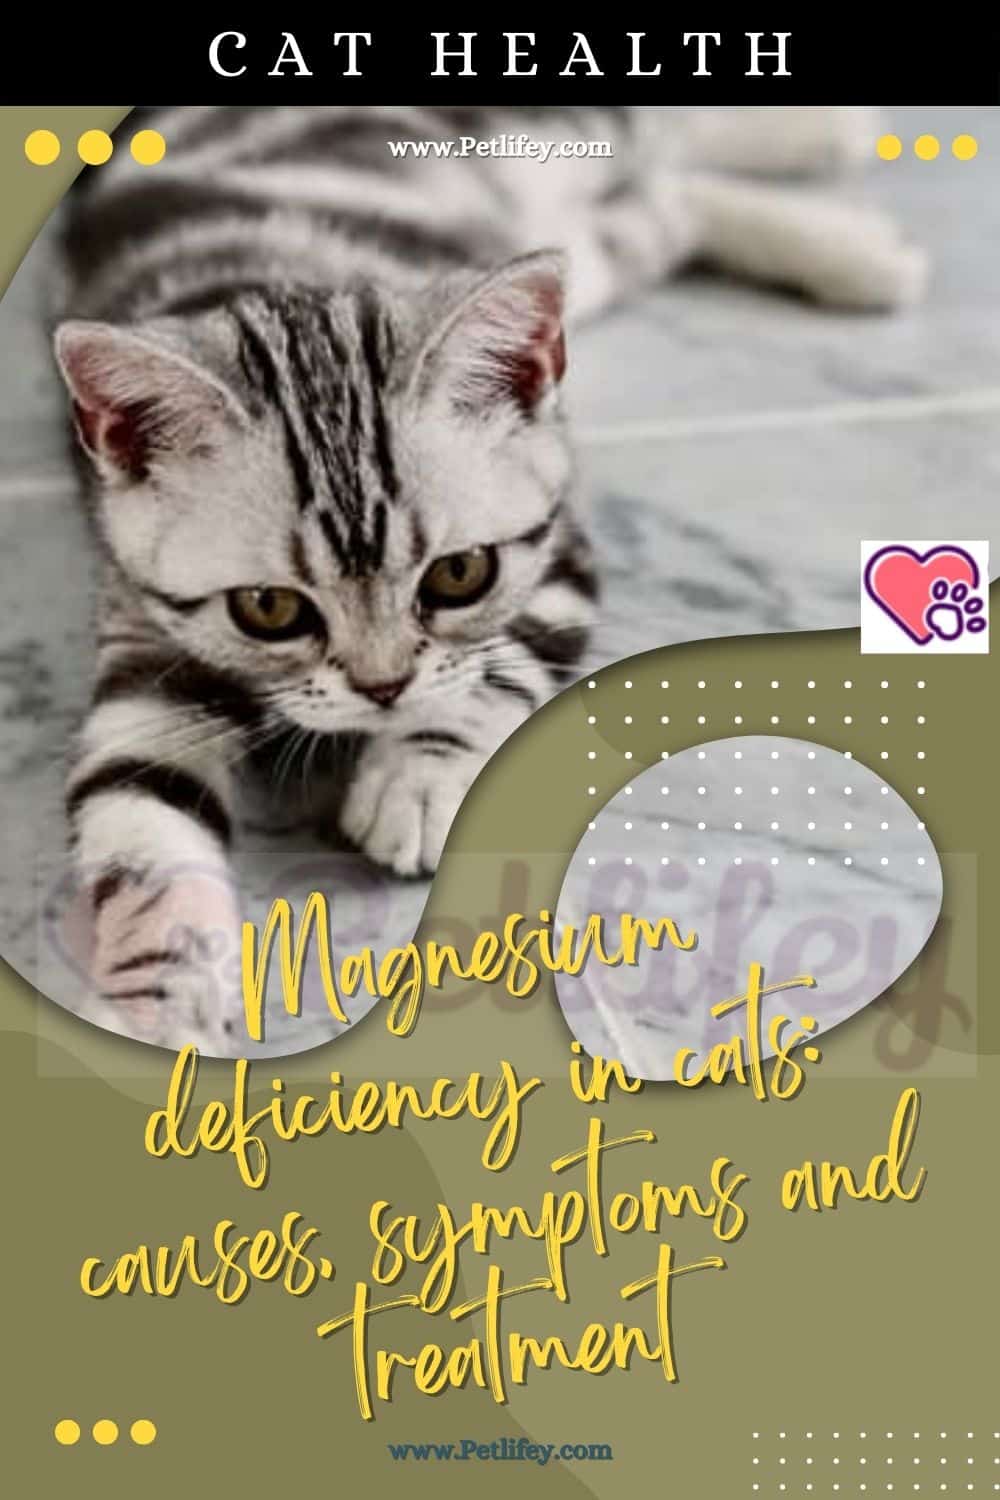 Magnesium deficiency in cats